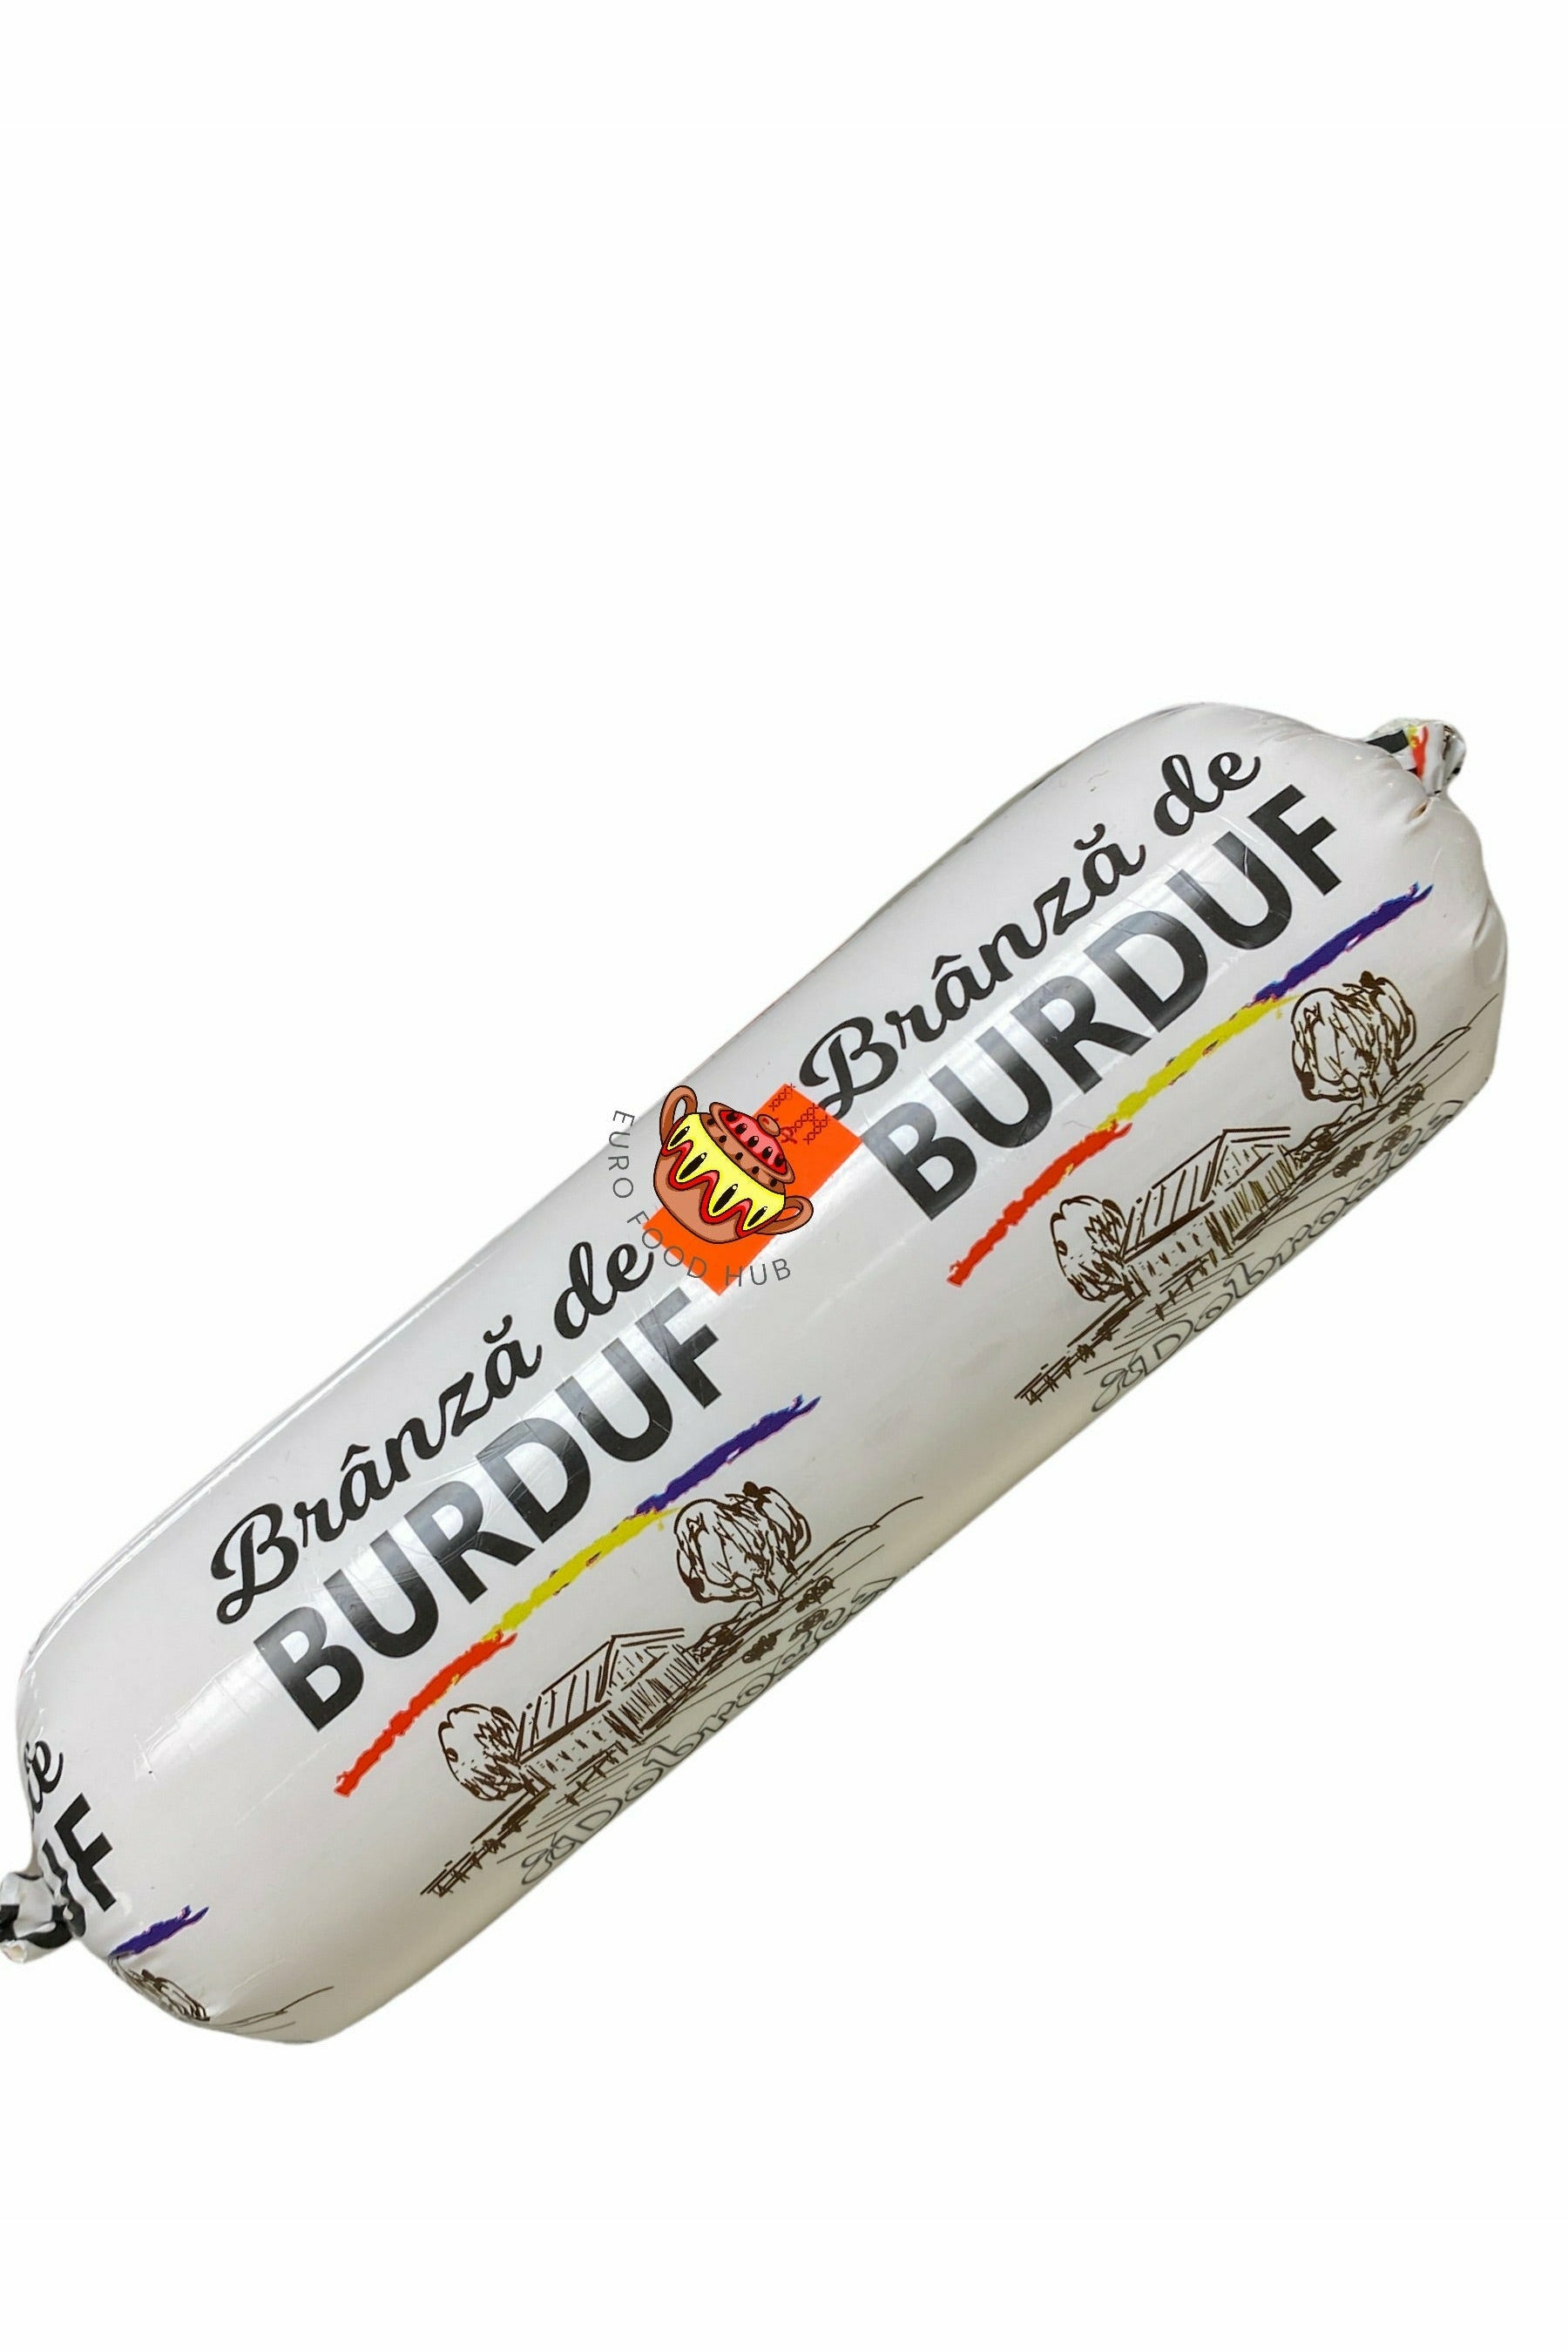 Dobrogea Branza de BURDUF Cheese - 450g